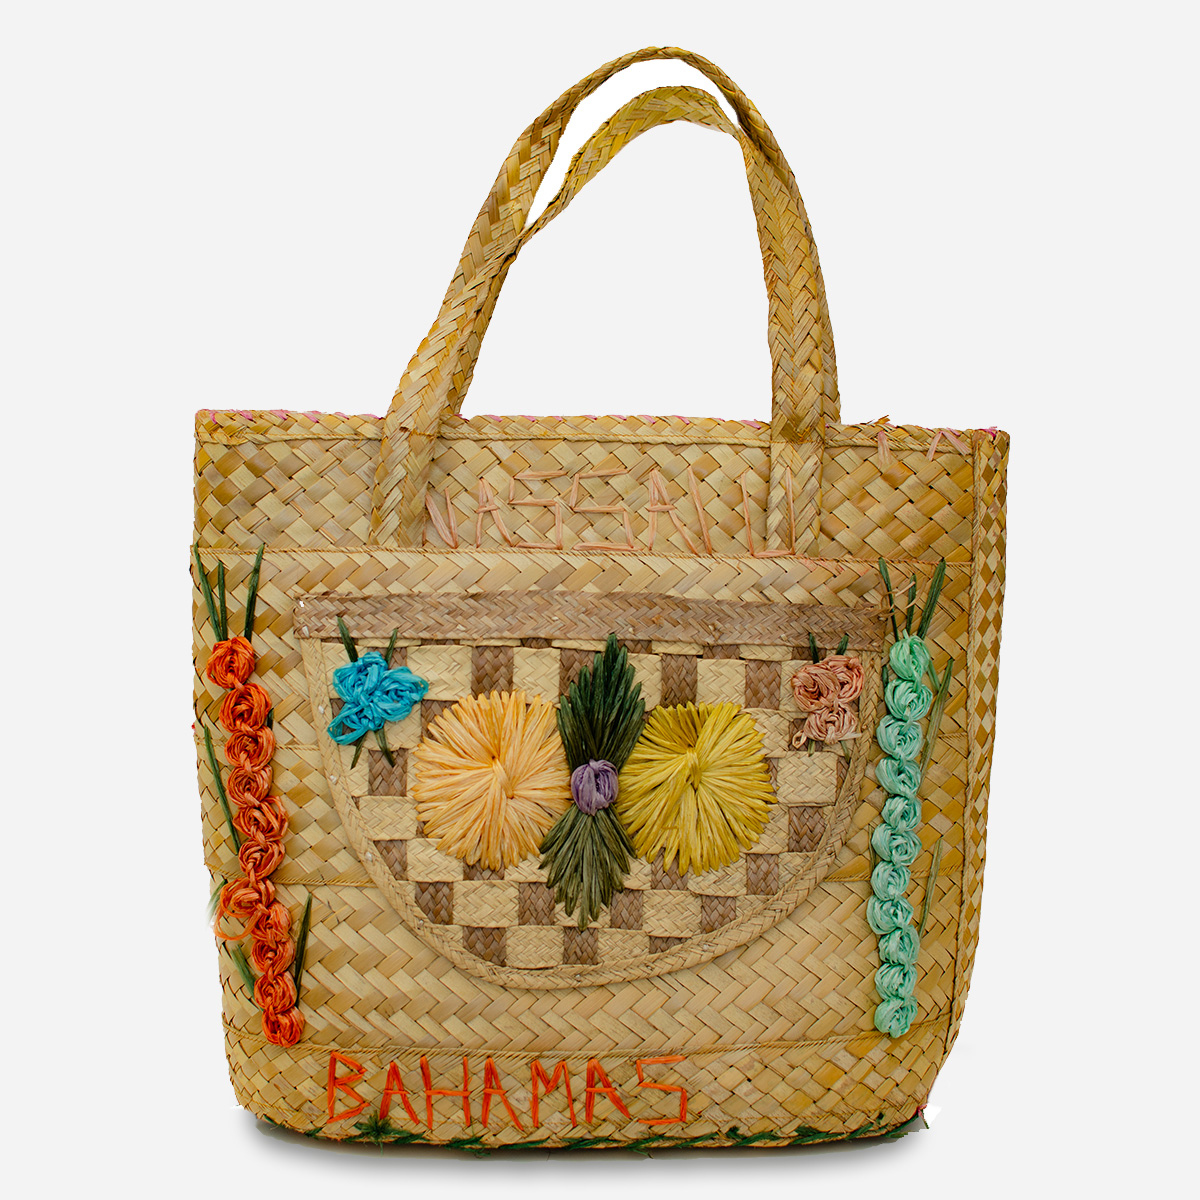 vintage Bahamas straw tote bag